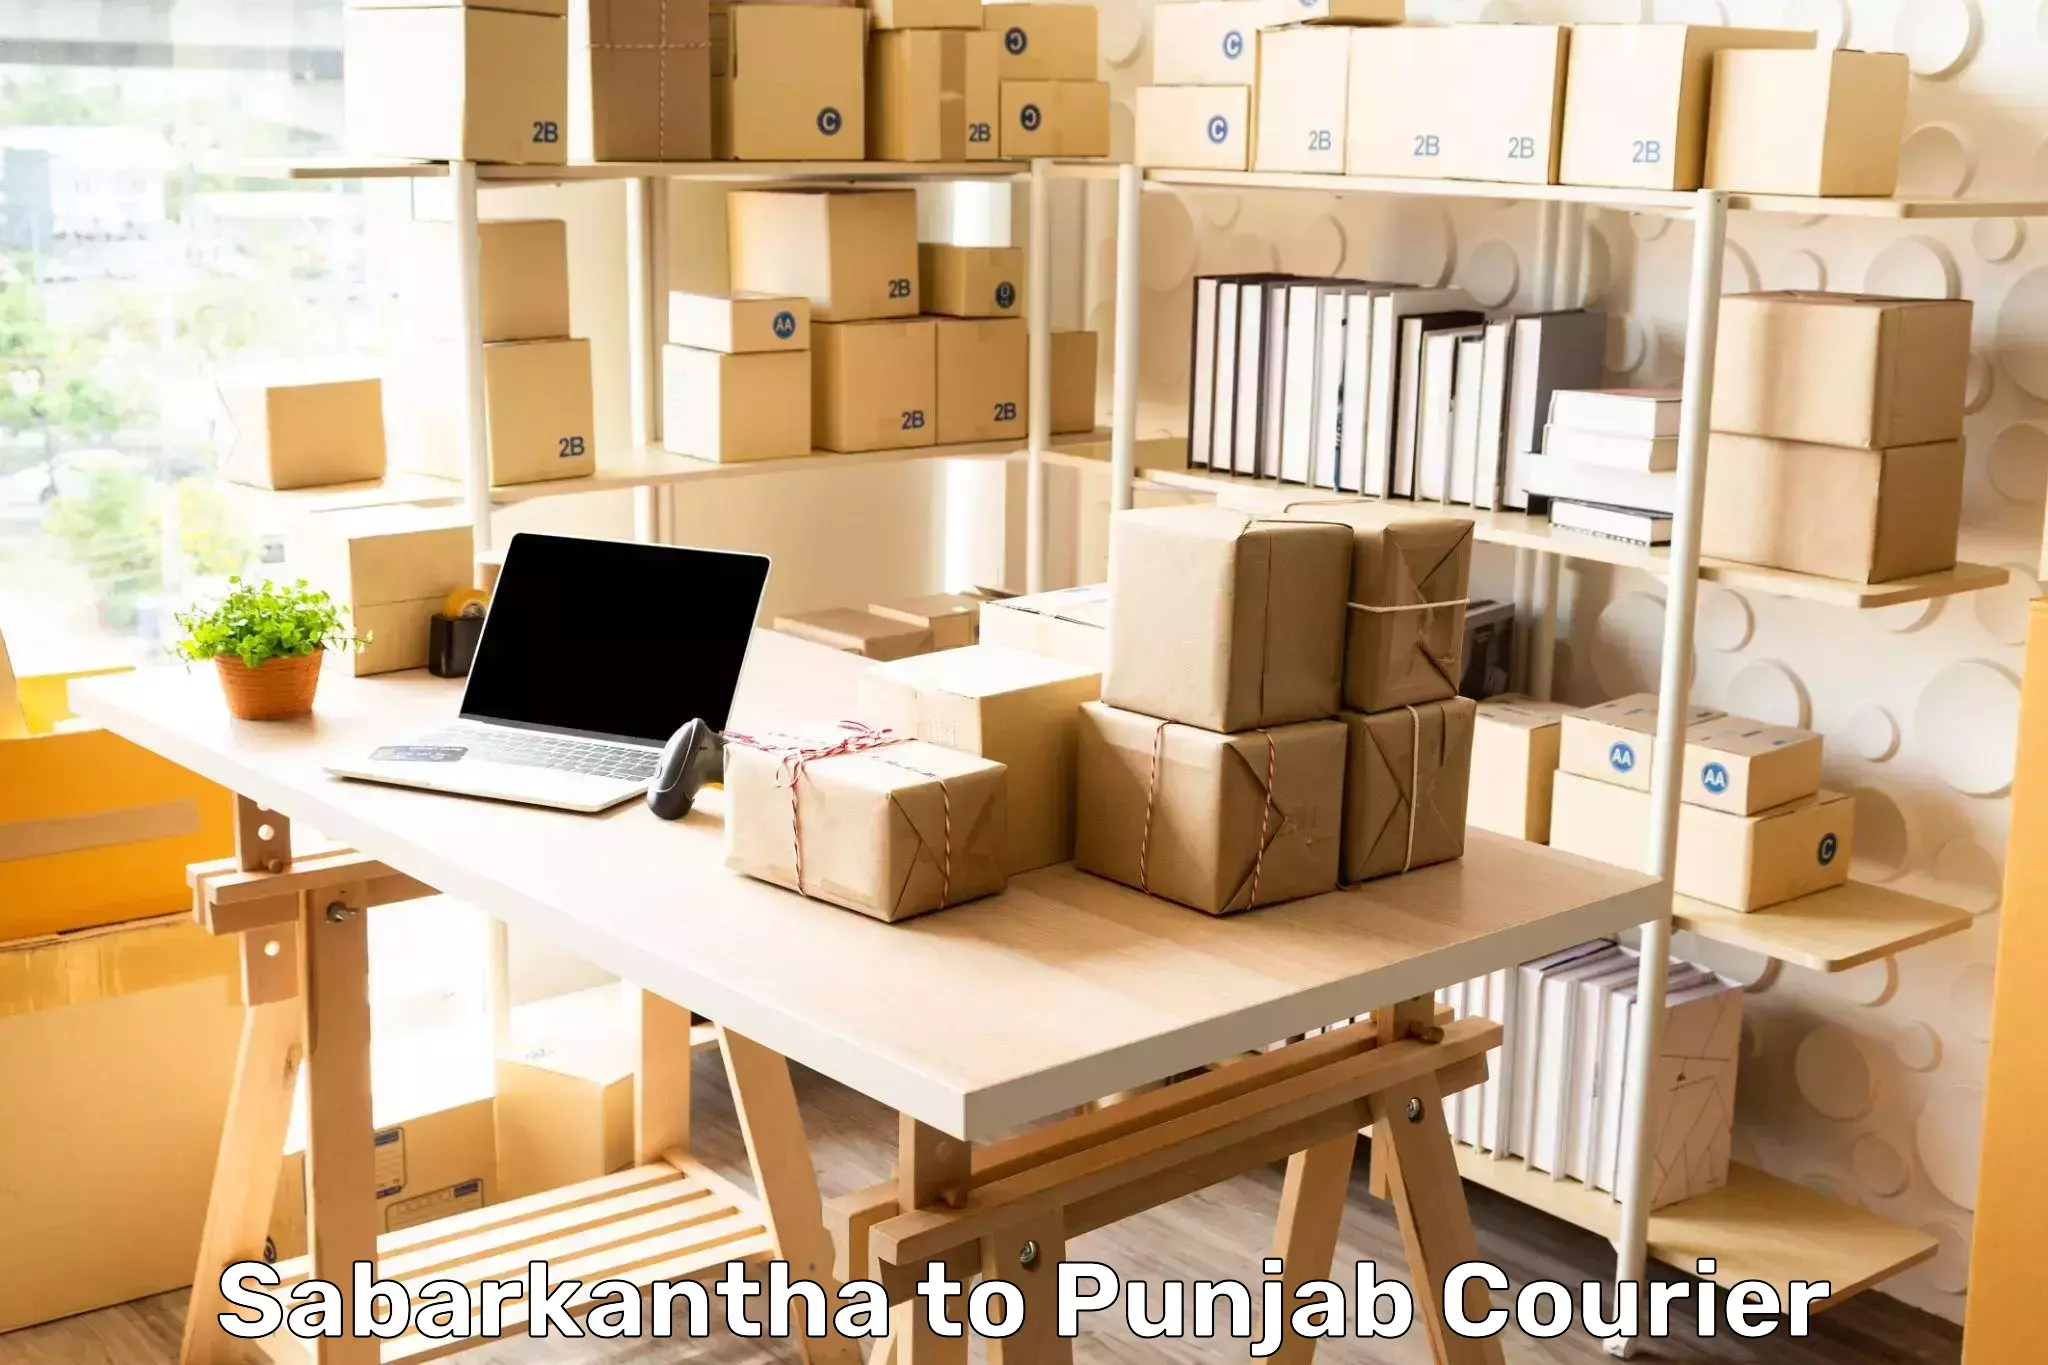 Smart logistics strategies Sabarkantha to Punjab